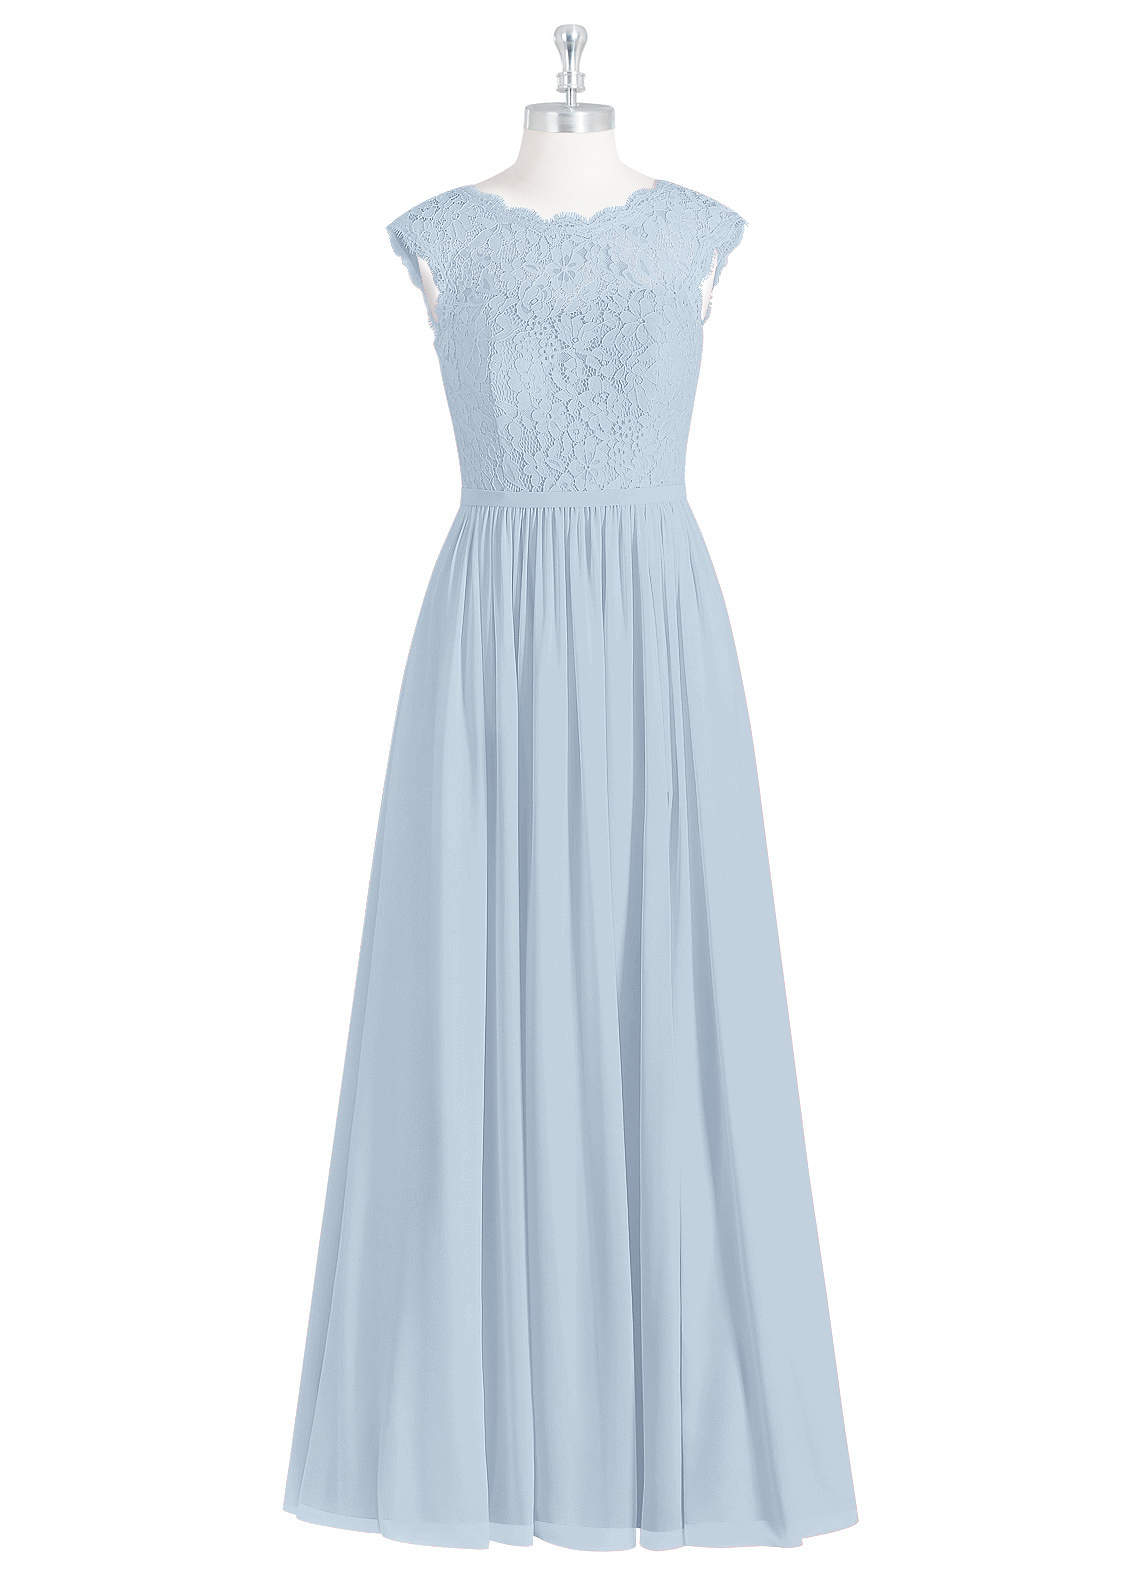 Azazie Arden Bridesmaid Dresses A-Line Chiffon Floor-Length Dress with Pockets image1